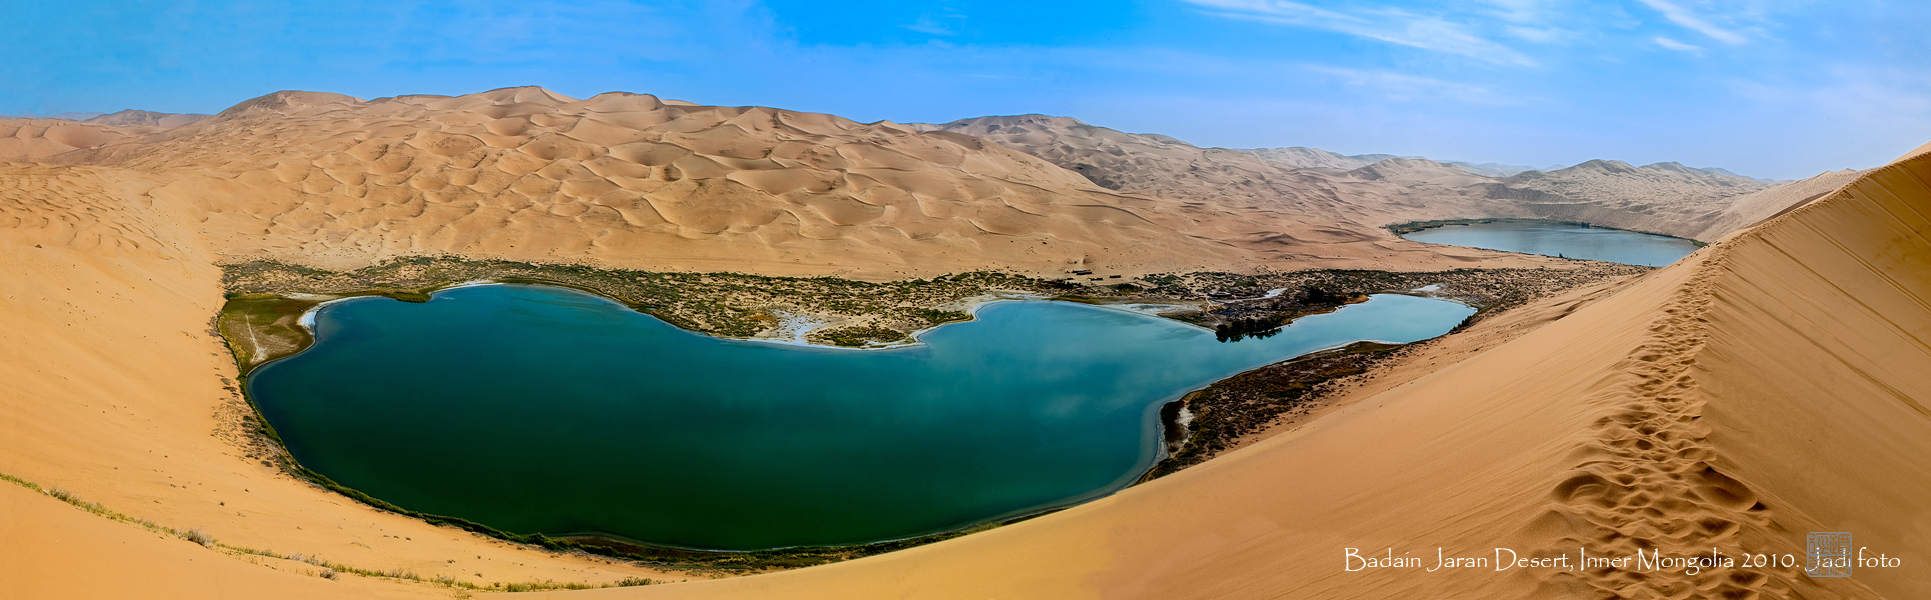 twin lakes in badain jaran desert, innner mongolia, china